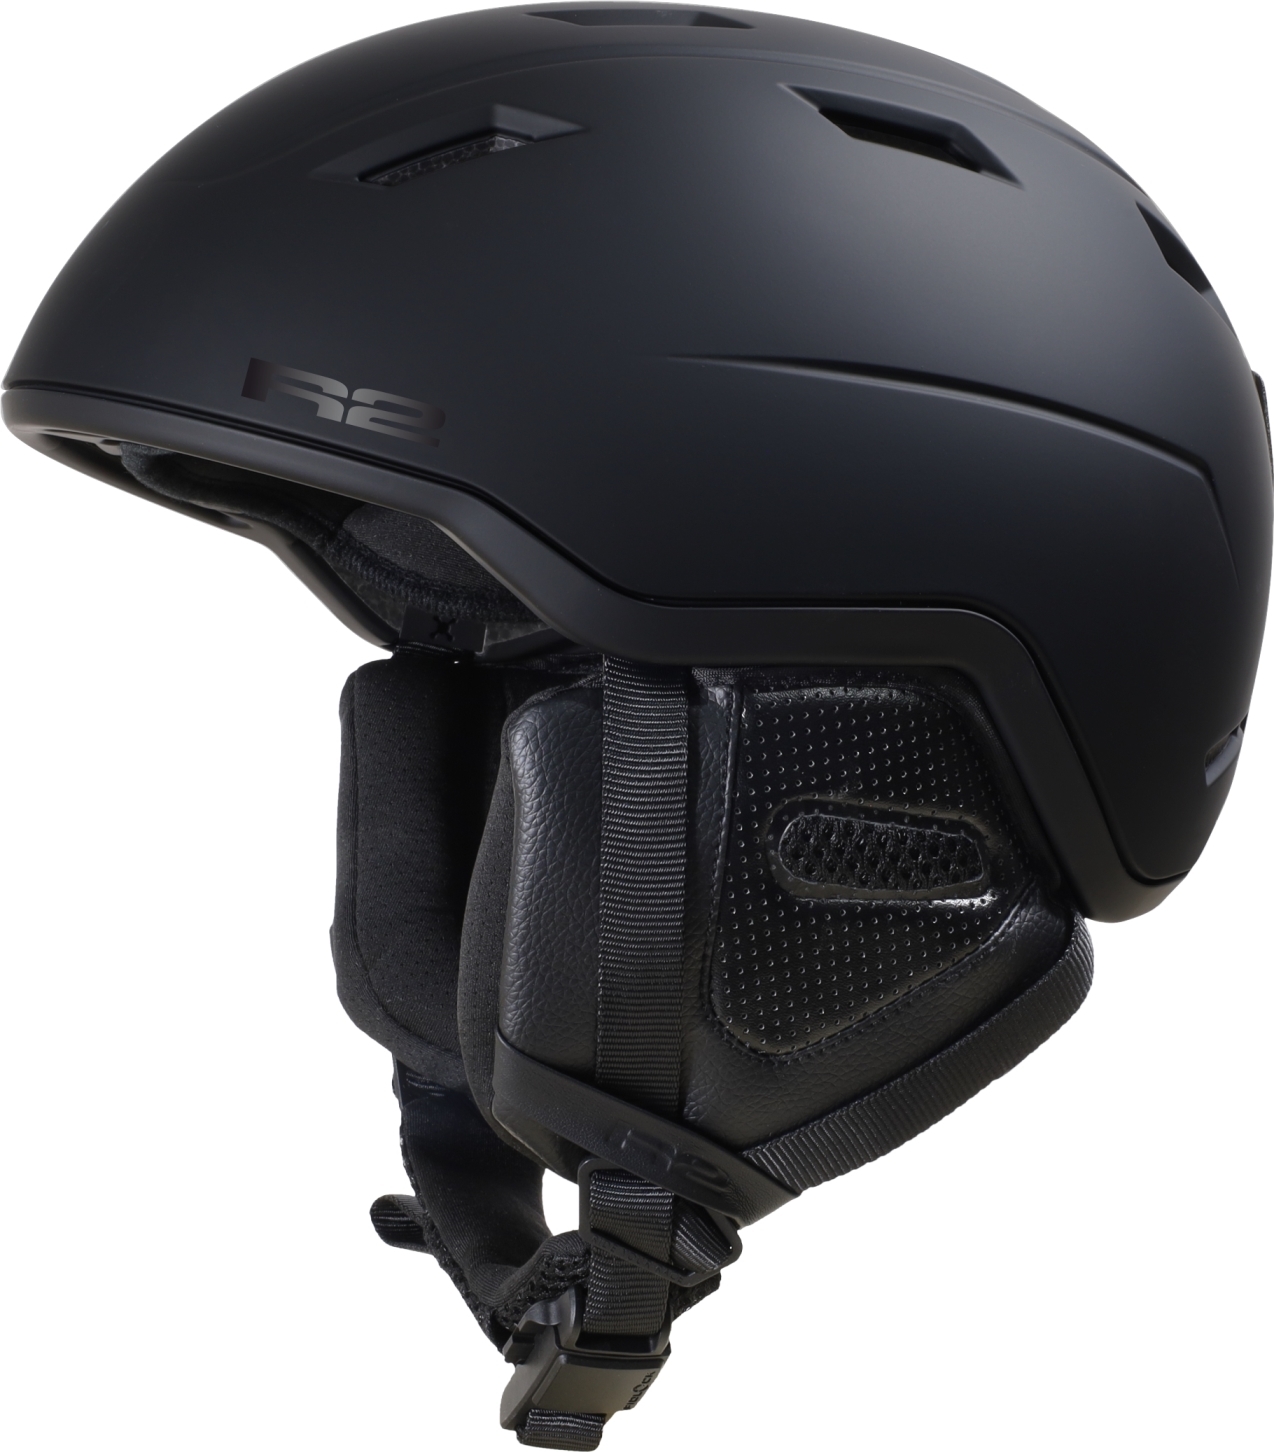 Unisex lyžařská helma R2 Irbis černá Velikost: S/M